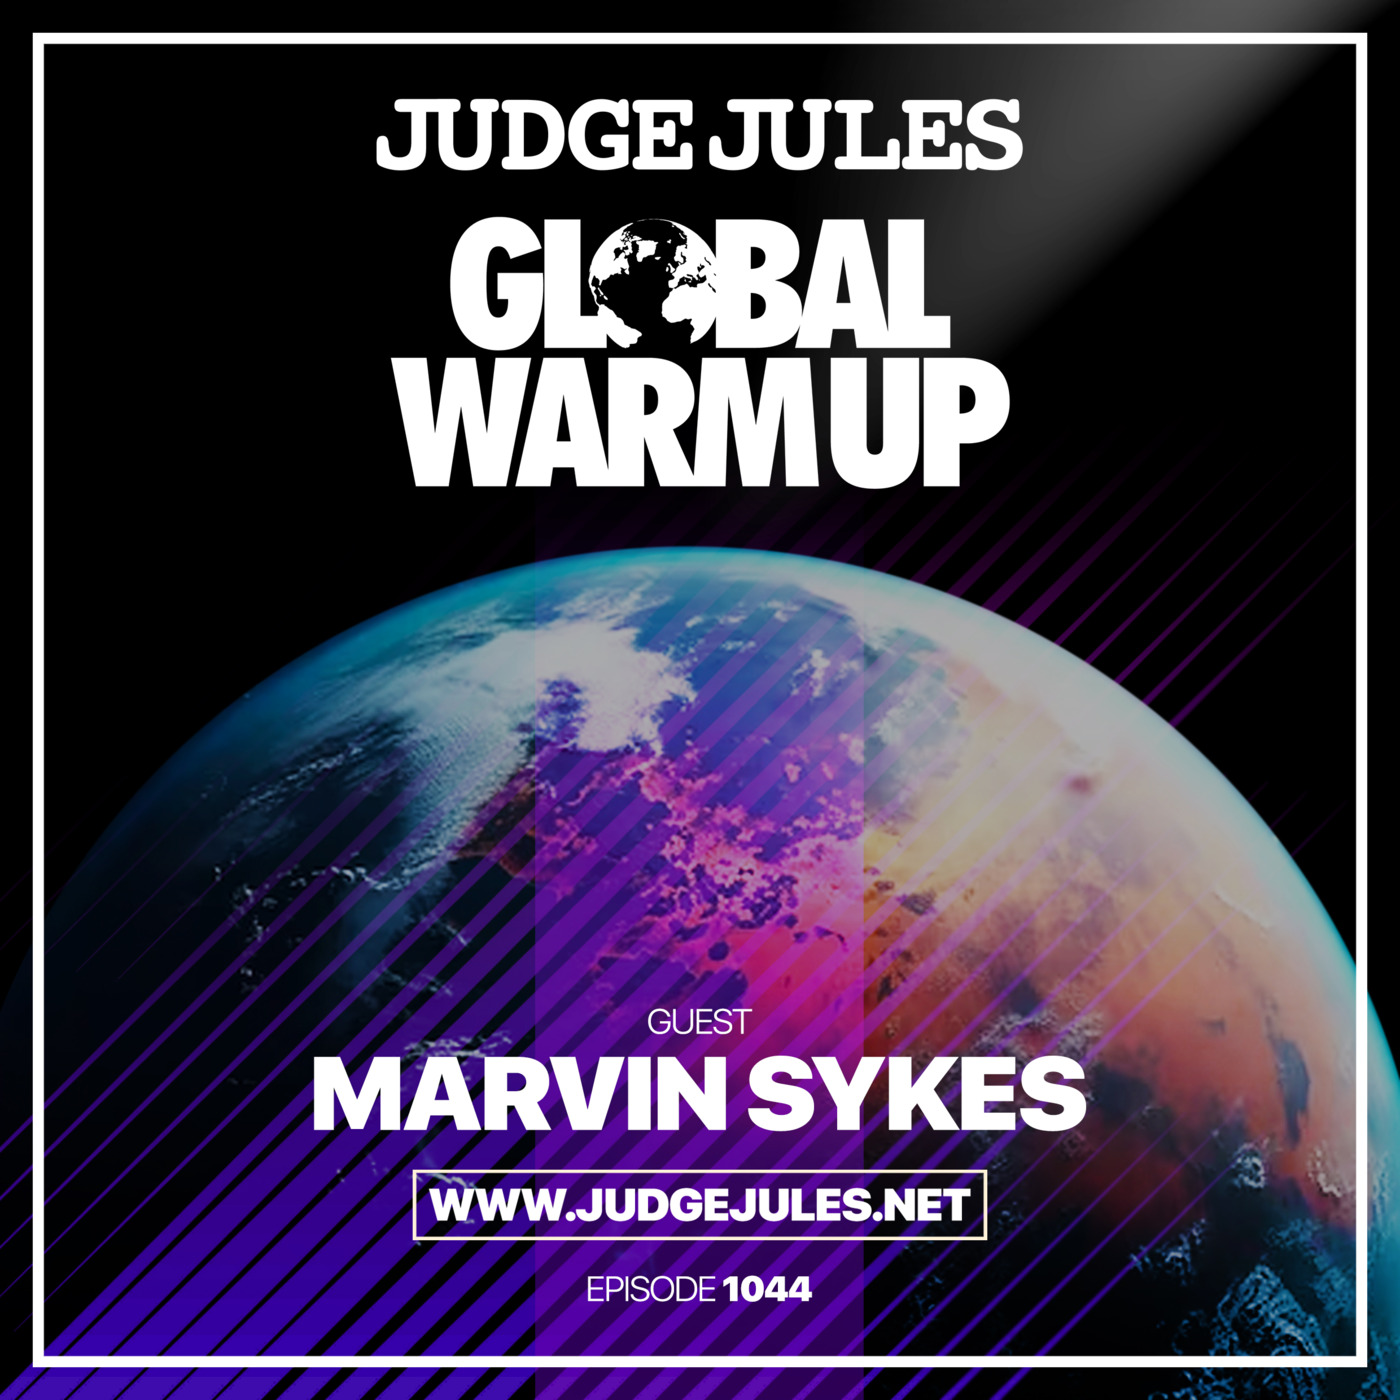 Episode 1044: JUDGE JULES PRESENTS THE GLOBAL WARM UP EPISODE 1044